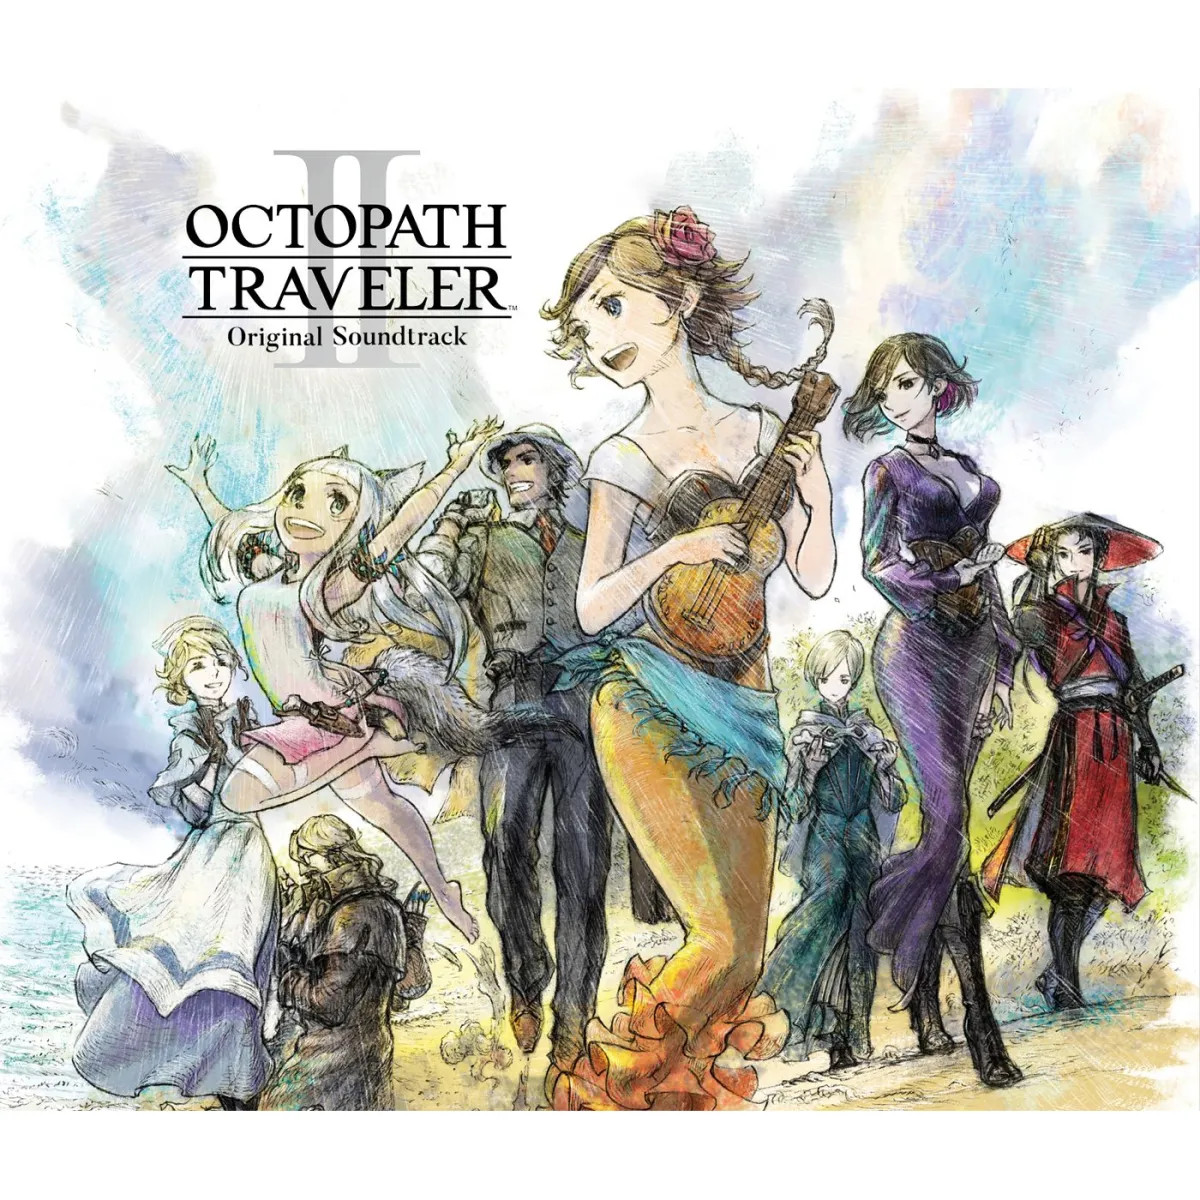 Octopath Traveler 2: A Mysterious Box Guide